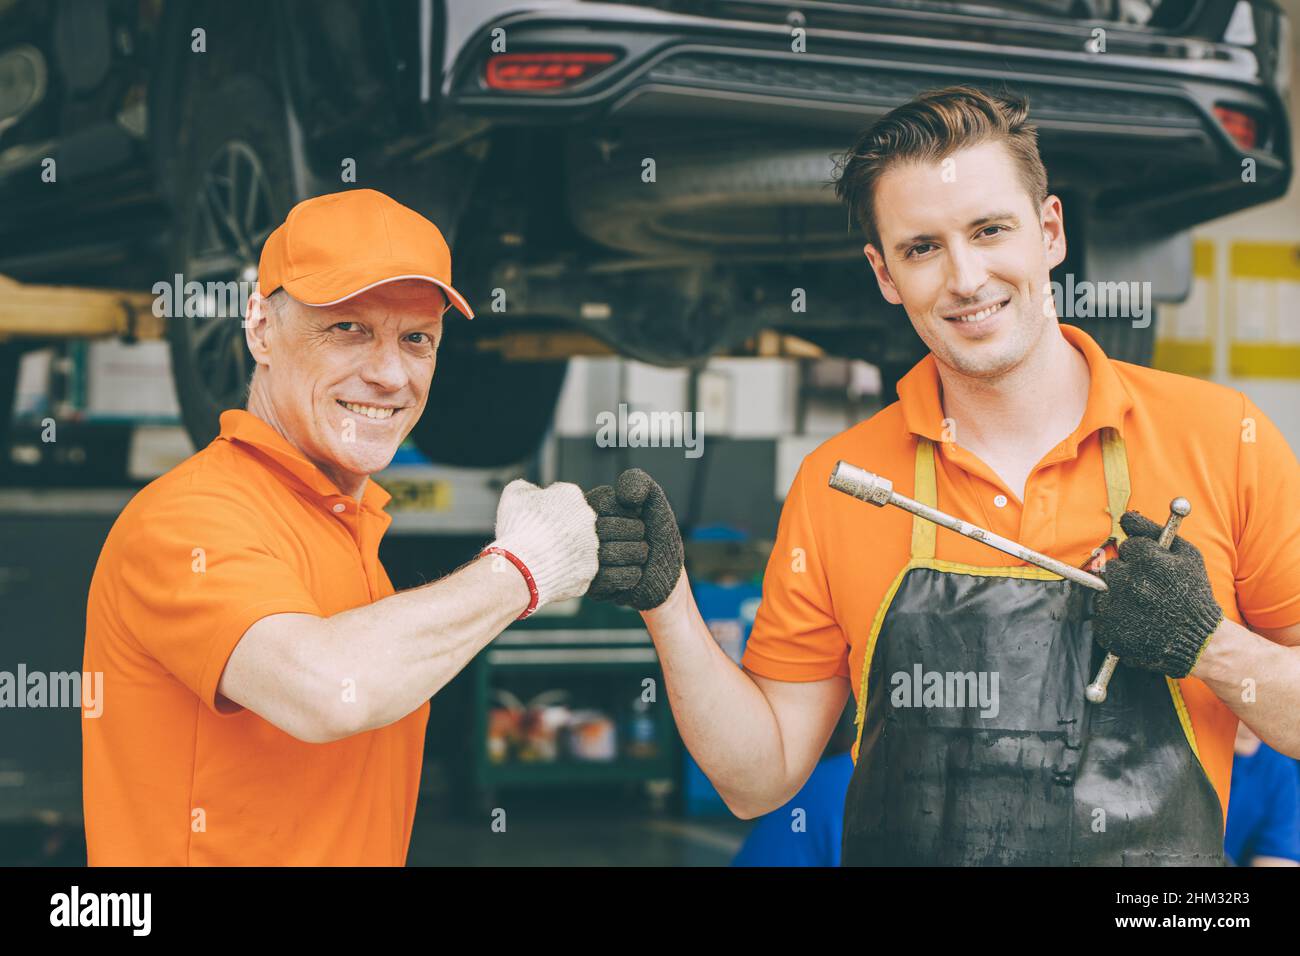 happy car mechanic service team enjoy working together in garage Stock Photo